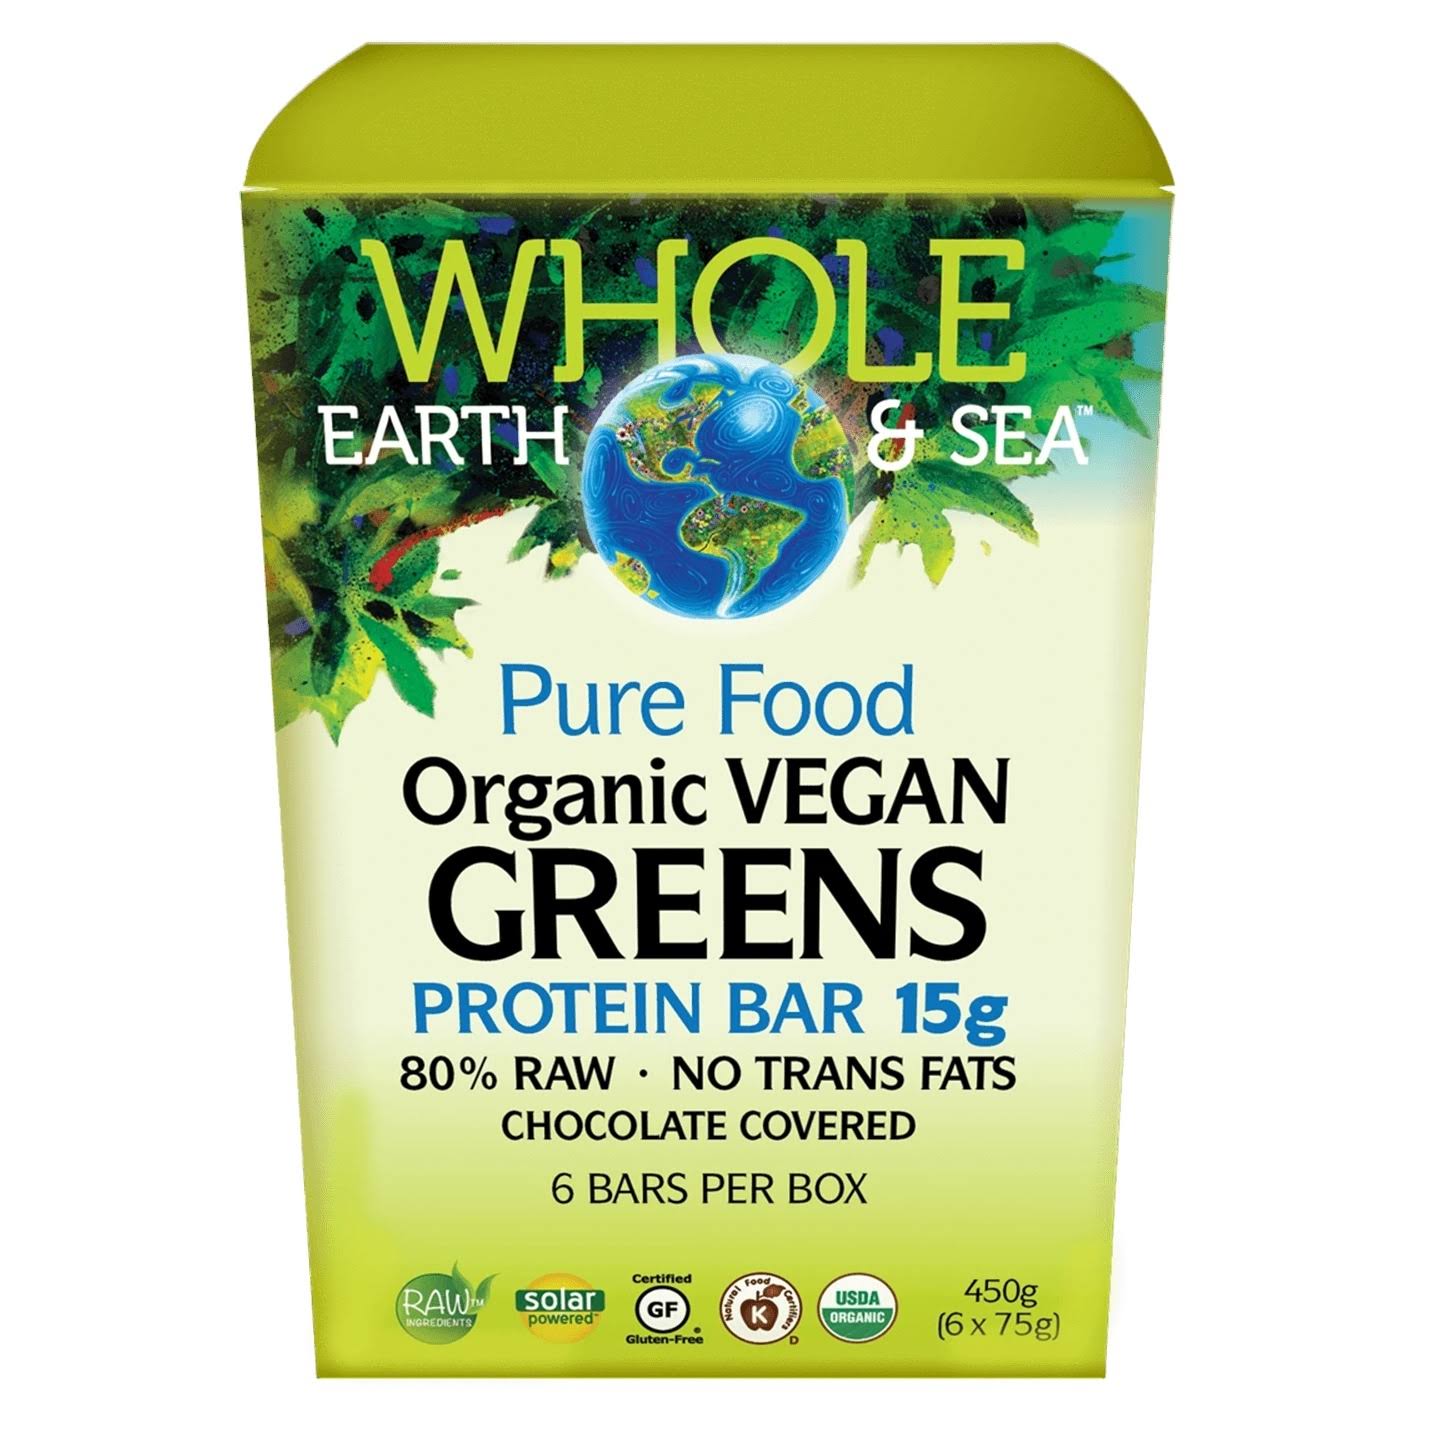 Whole Earth & Sea Organic Vegan Greens Protein Bars